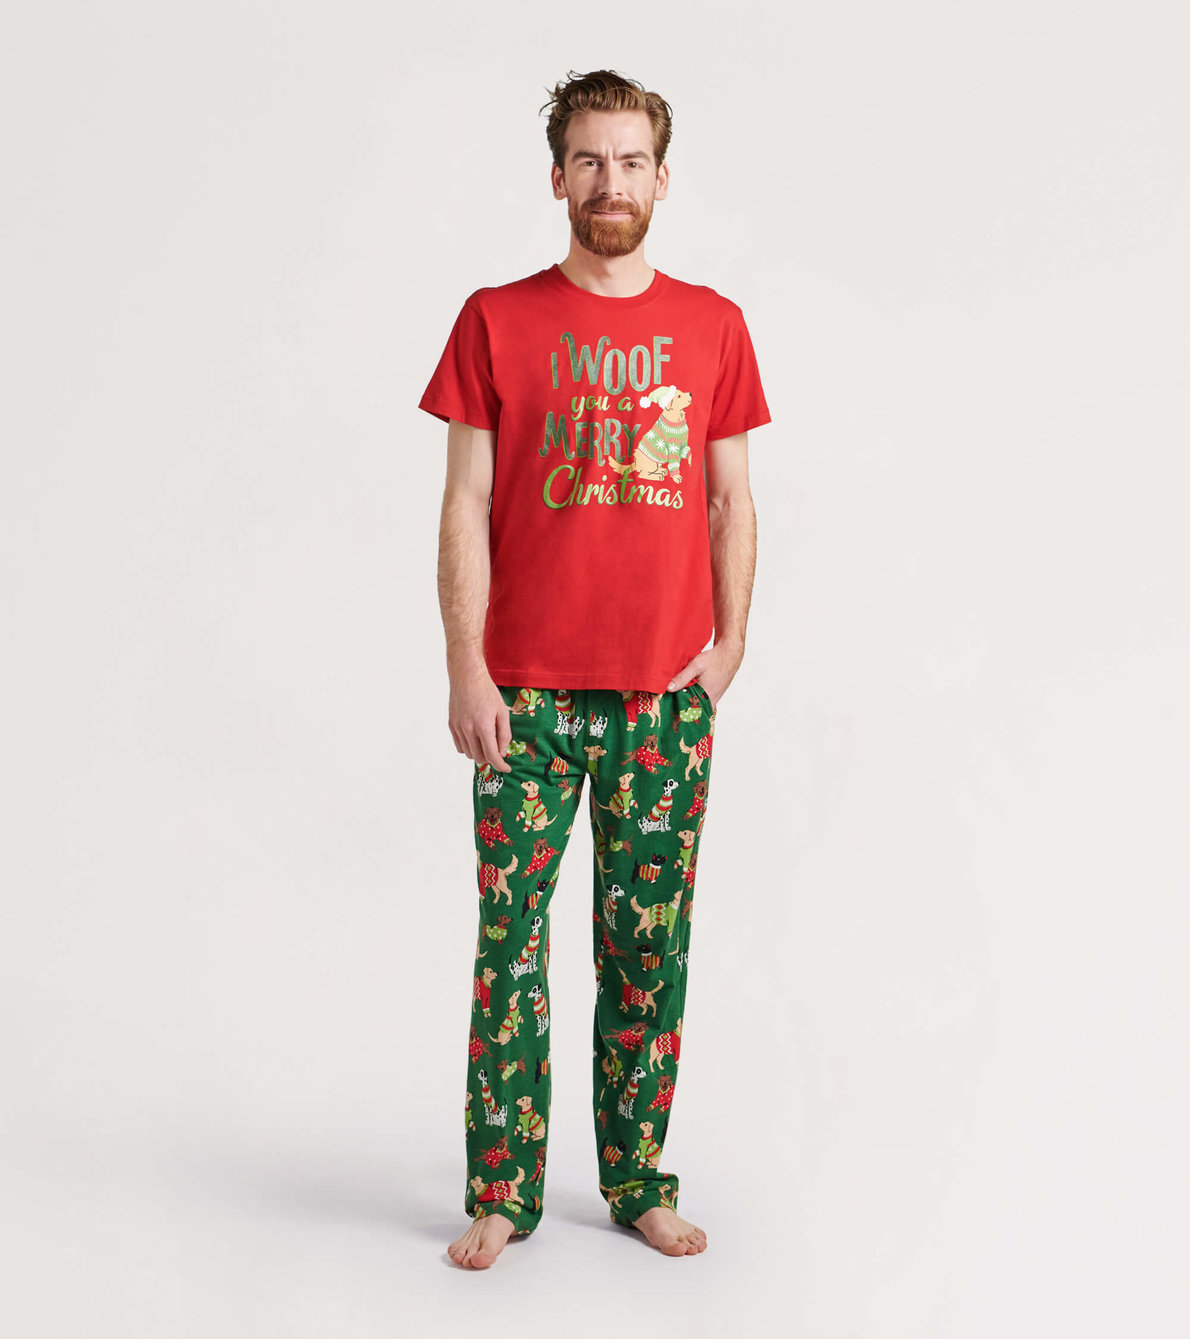 View larger image of Woofing Christmas Men's Pajama Pants